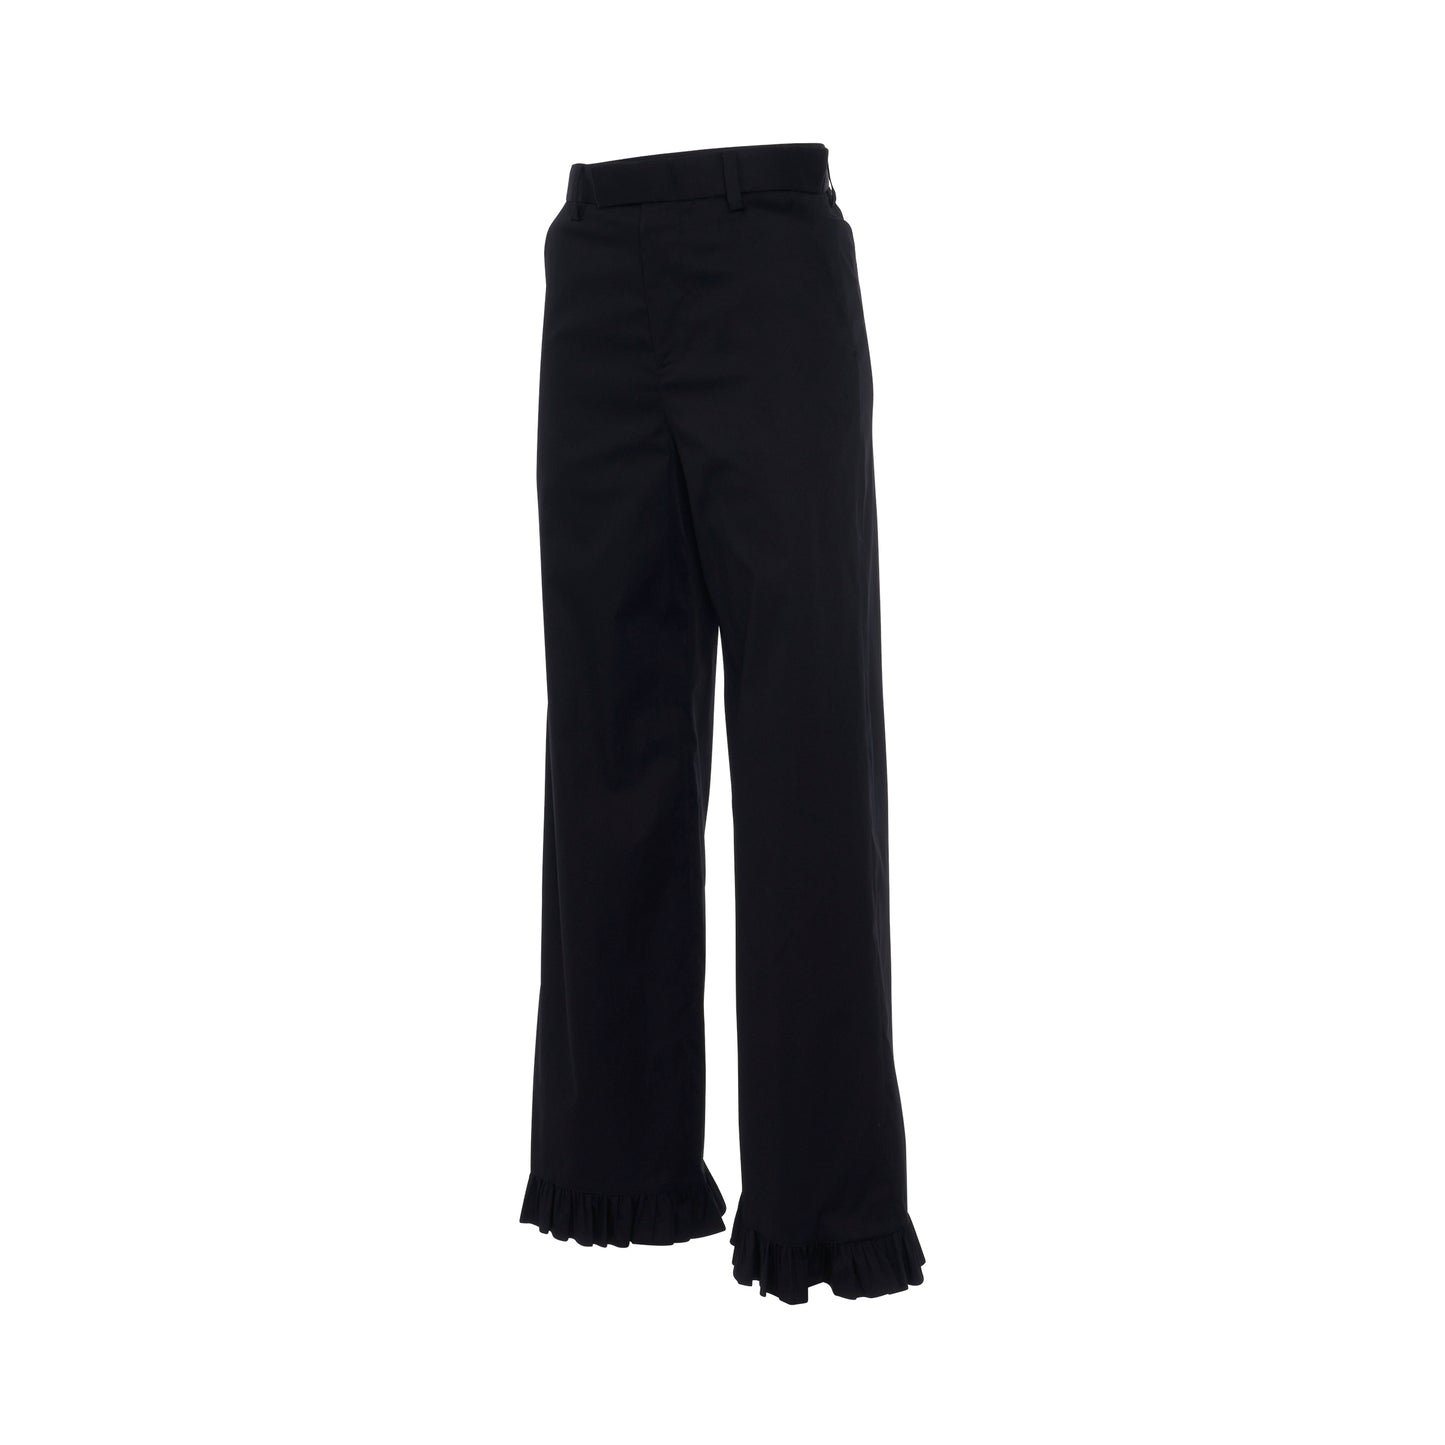 Ruffle Detail Regular Fit Trouser in Black